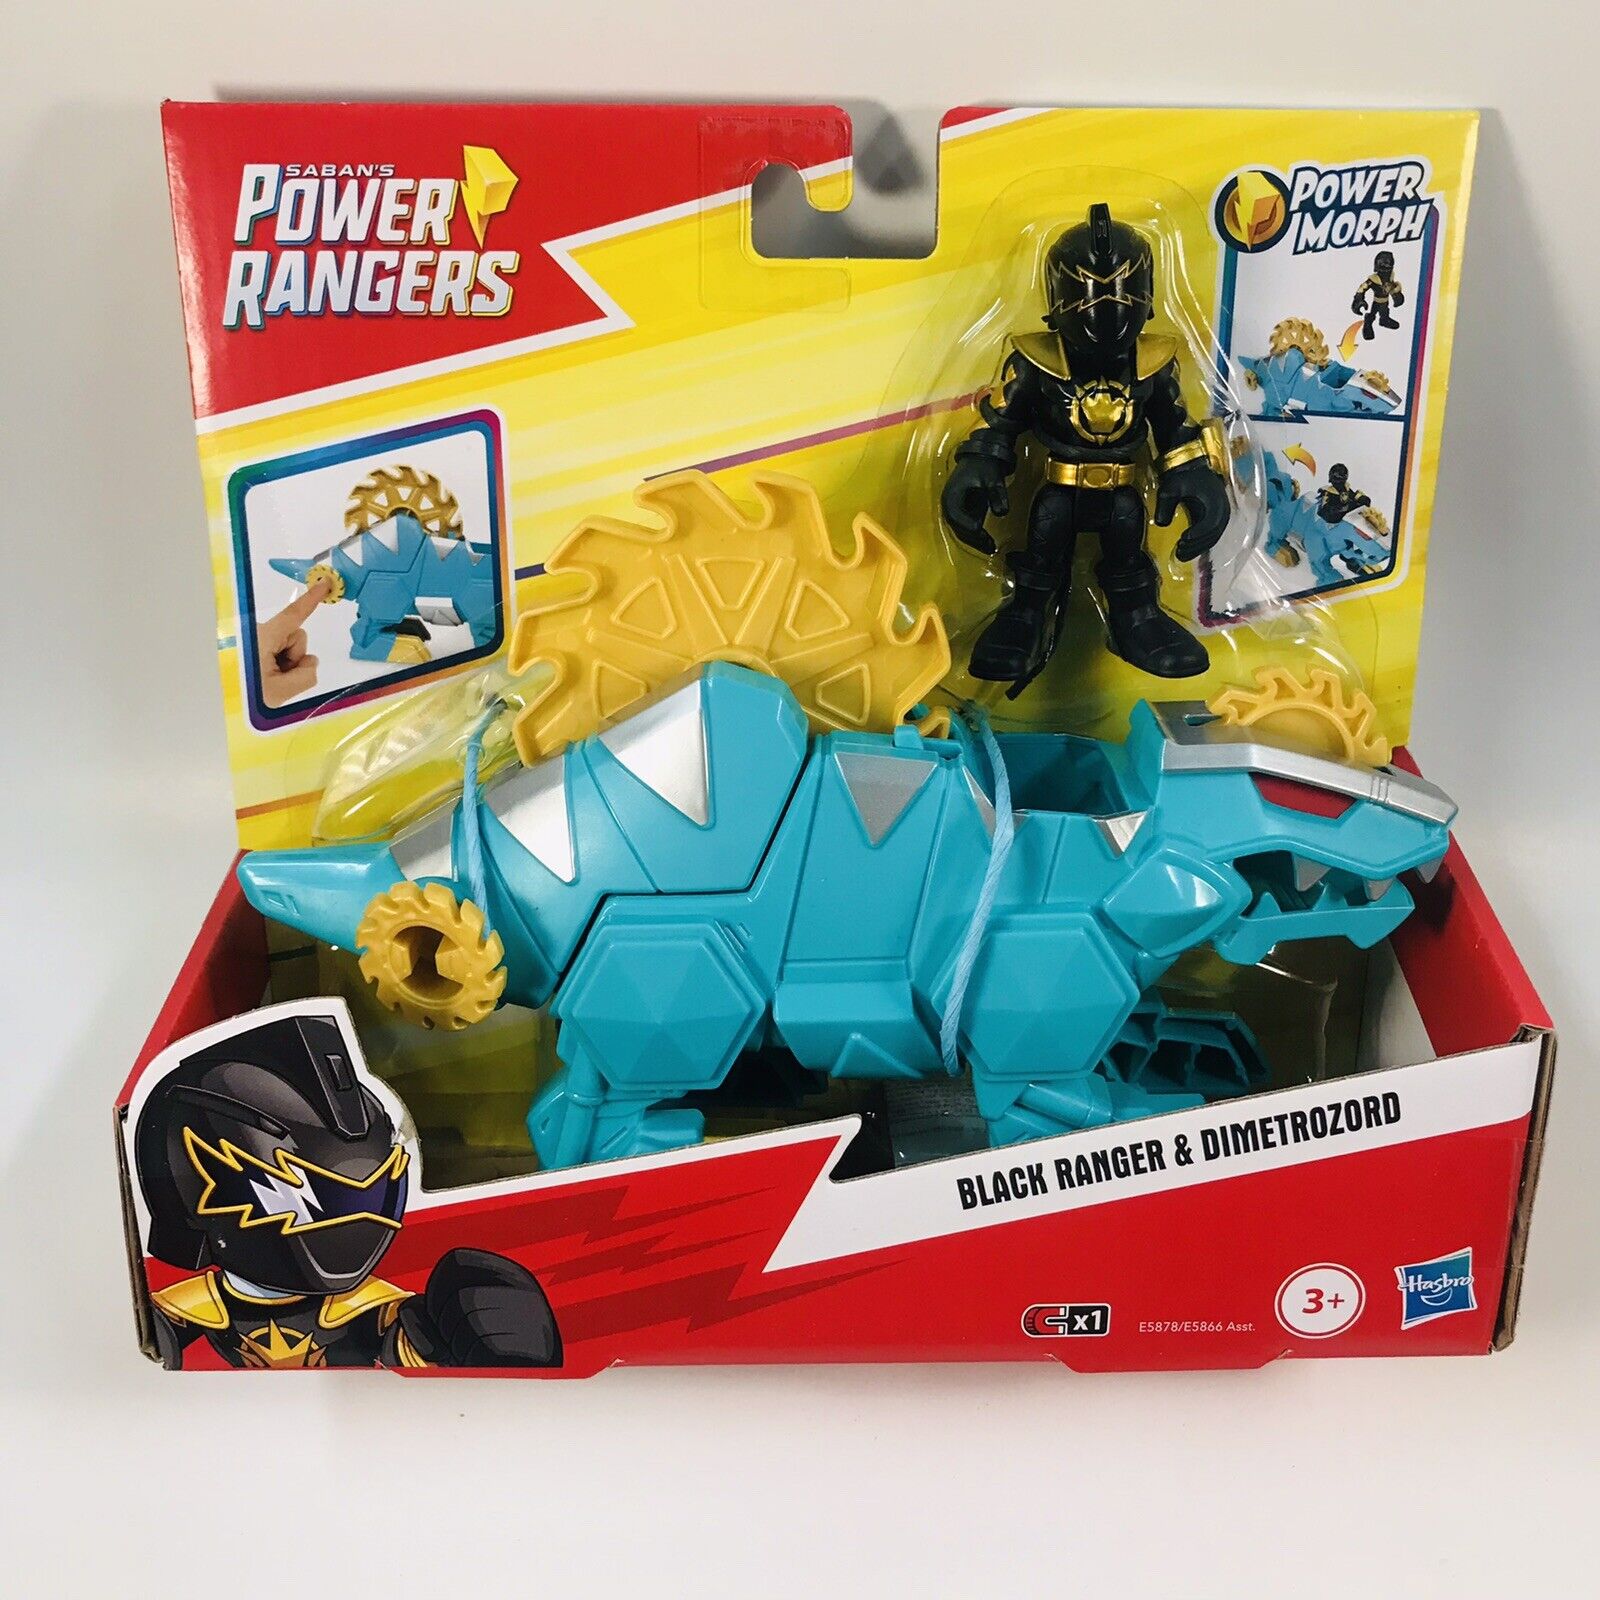 Power Rangers Black Ranger DimetroZord Playskool Action Figure Dinosaur 2019